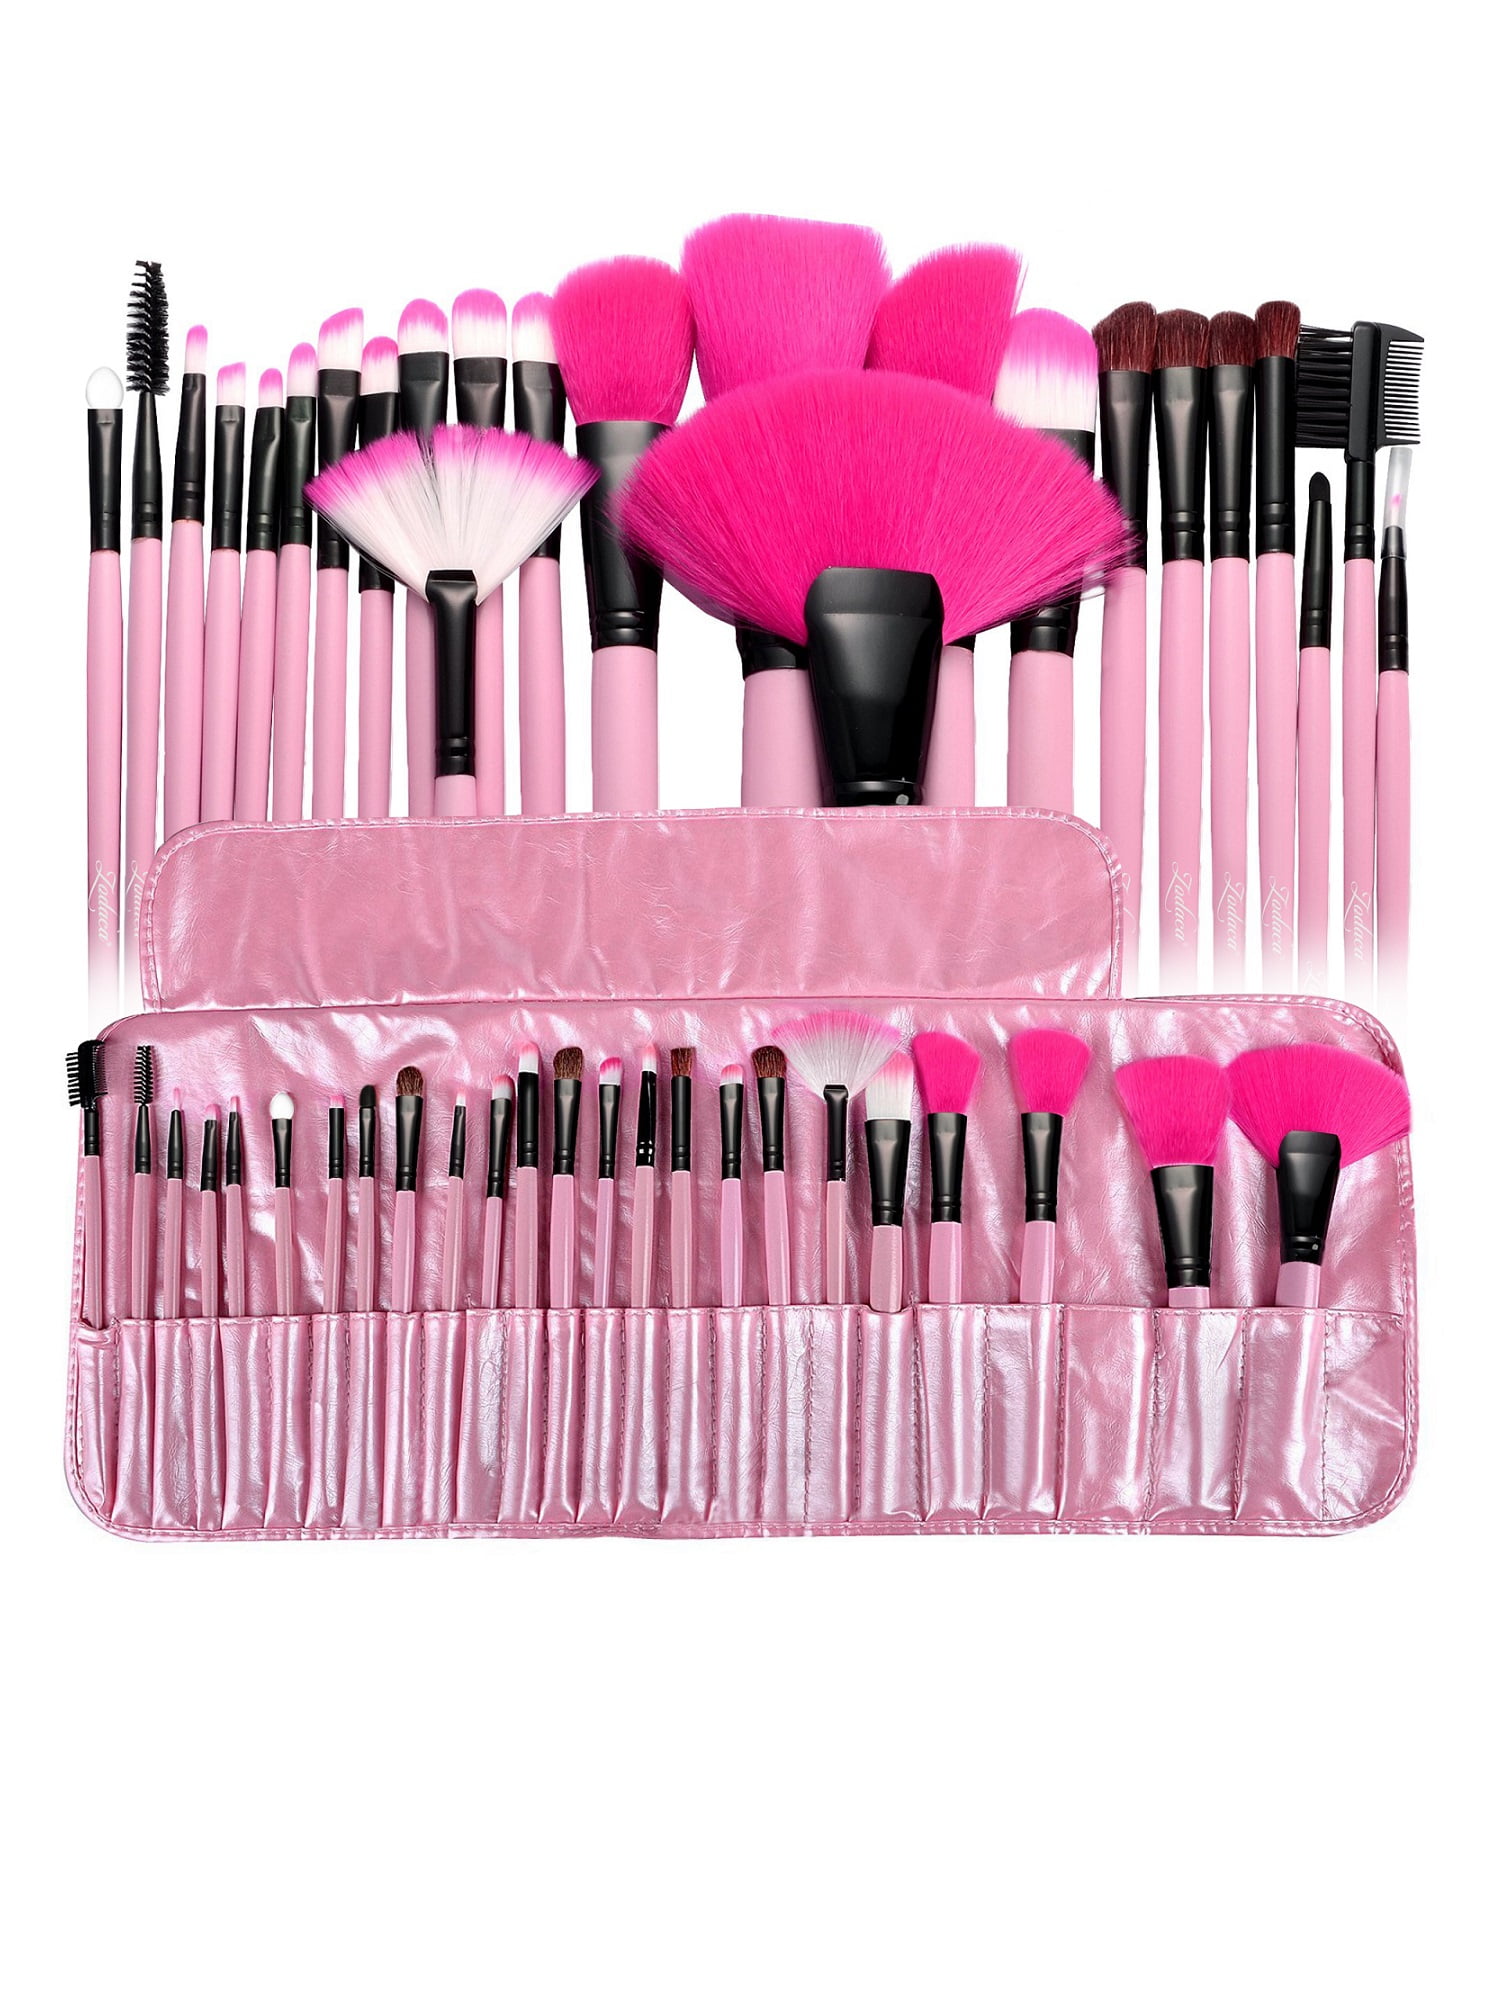 Zodaca Makeup Brush Set Kit with Cosmetic Bag, Pink, 24 ...